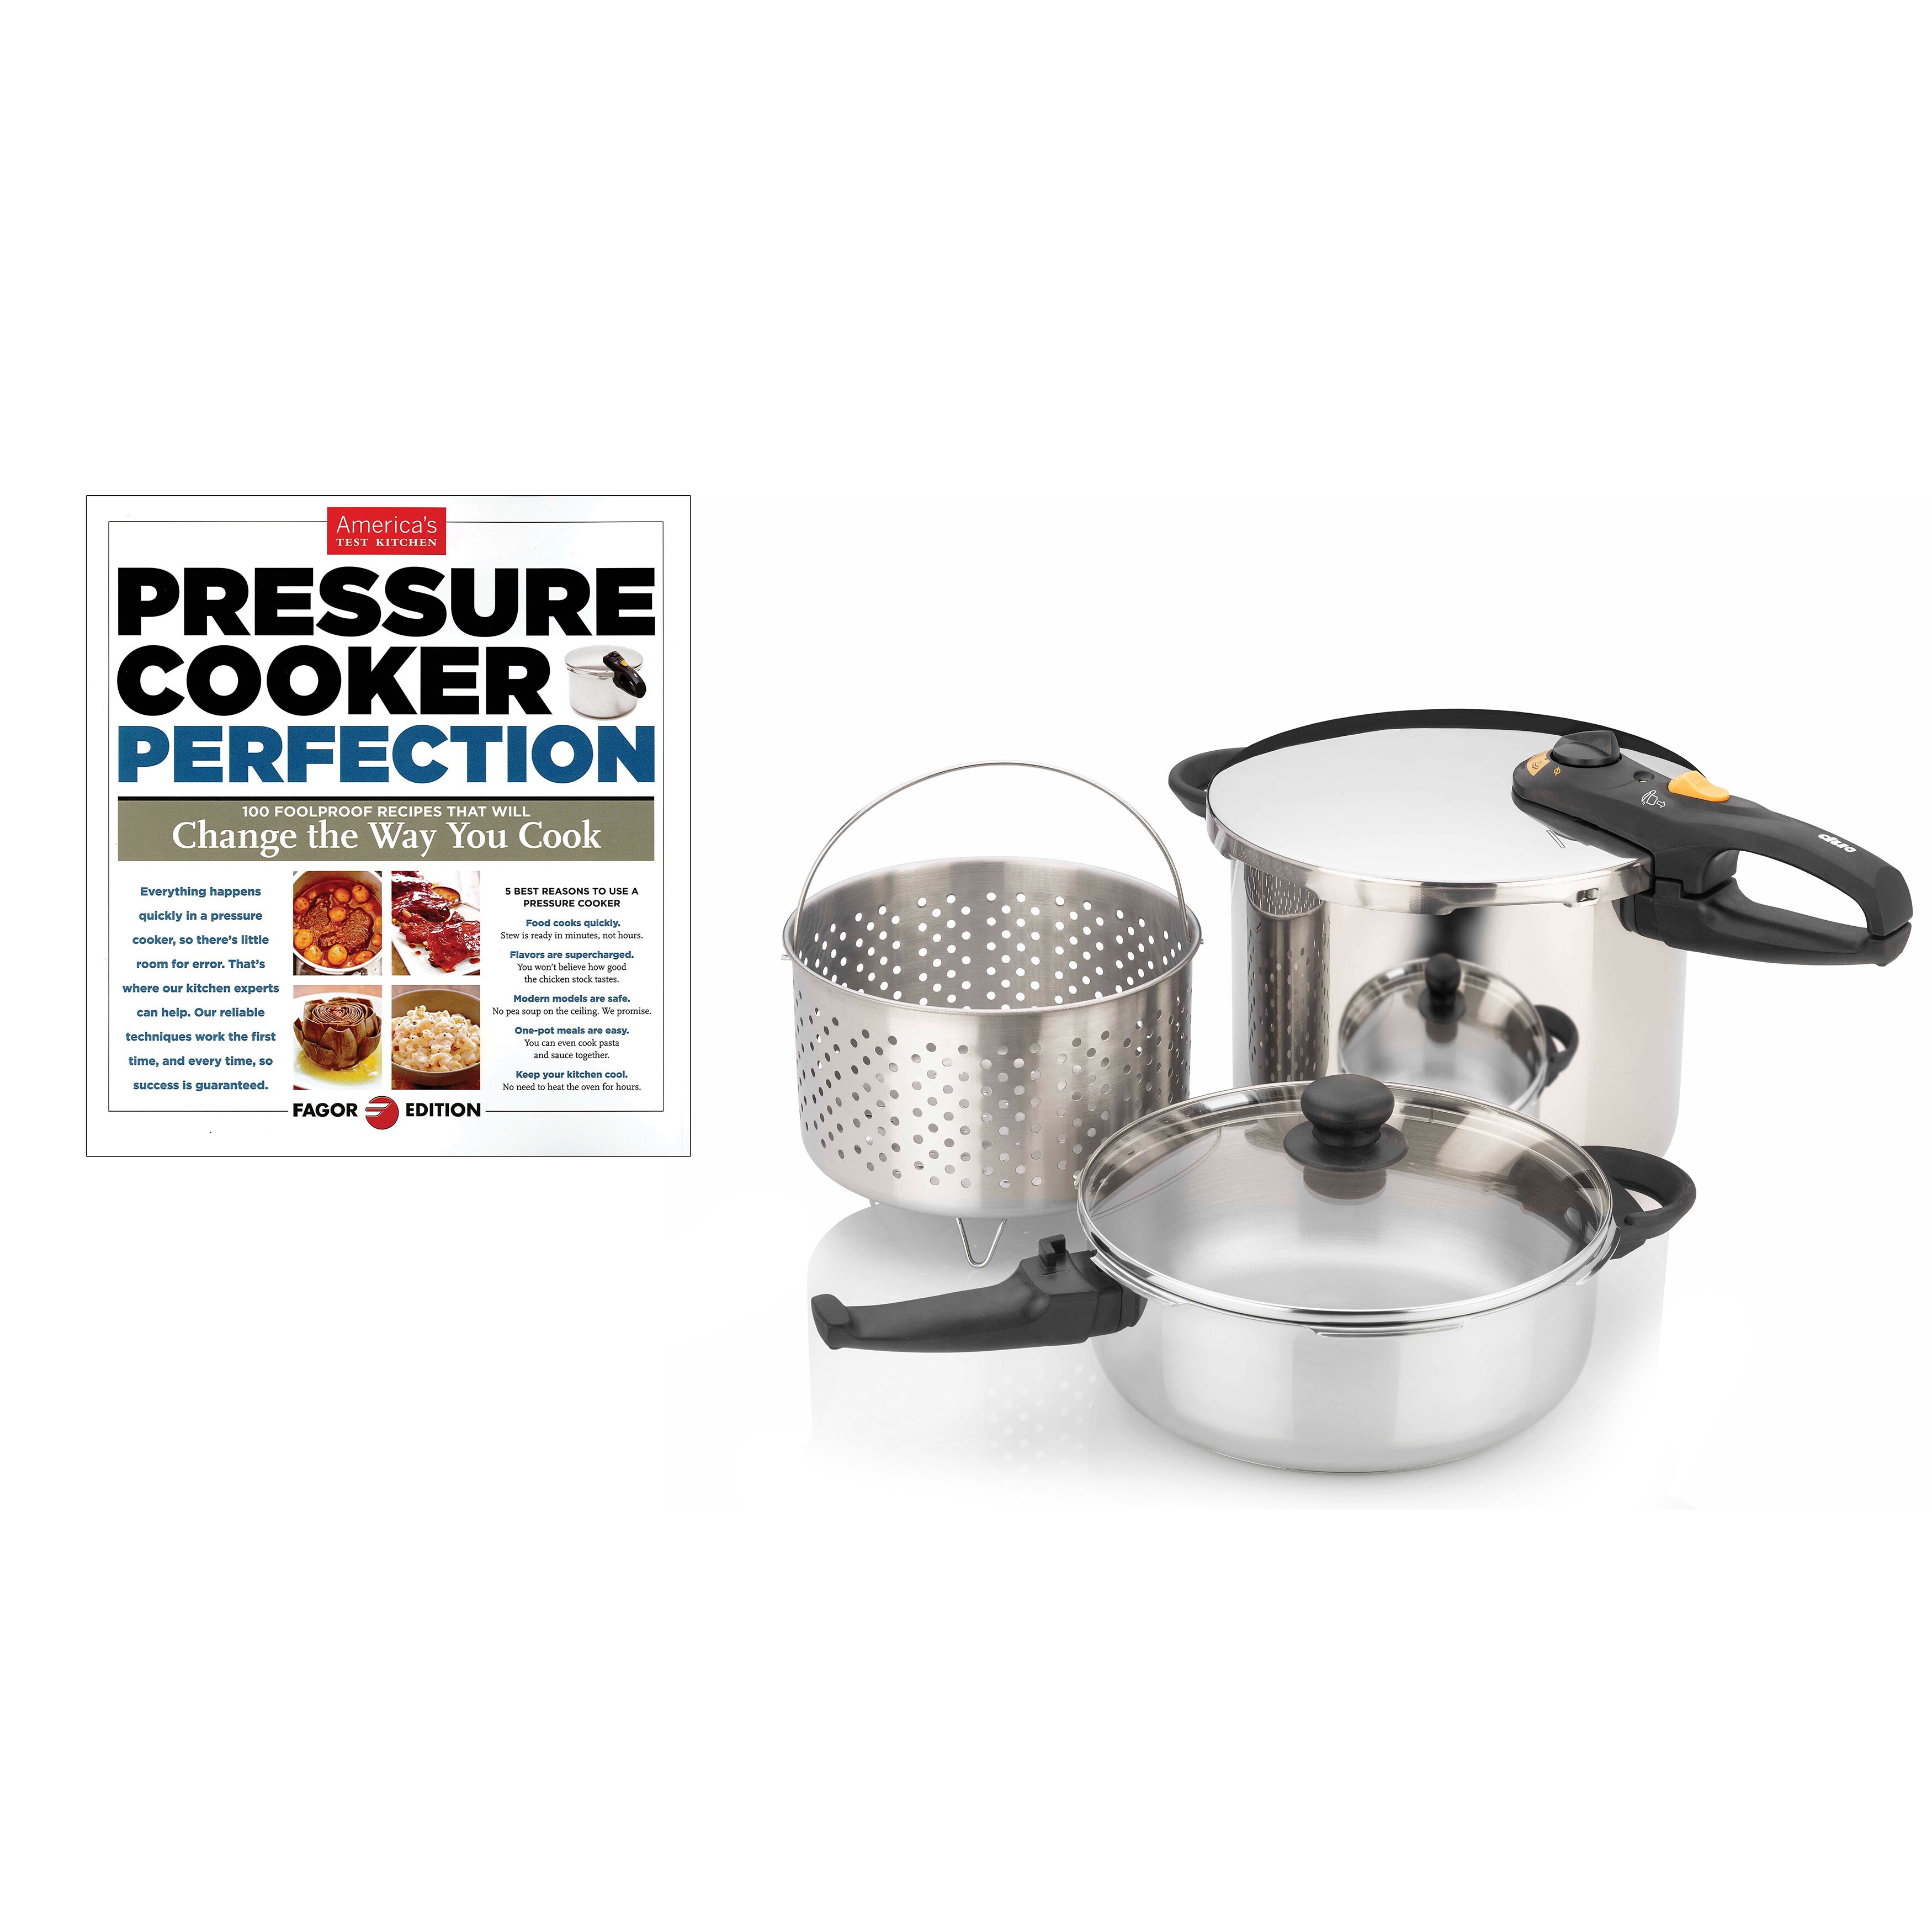 https://ak1.ostkcdn.com/images/products/8595198/Fagor-Duo-Combi-5-piece-Pressure-Cooker-Set-with-Bonus-Pressure-Cooker-Perfection-Cookbook-c6d7b50d-36aa-46c2-9ffb-b74182d00ff9.jpg